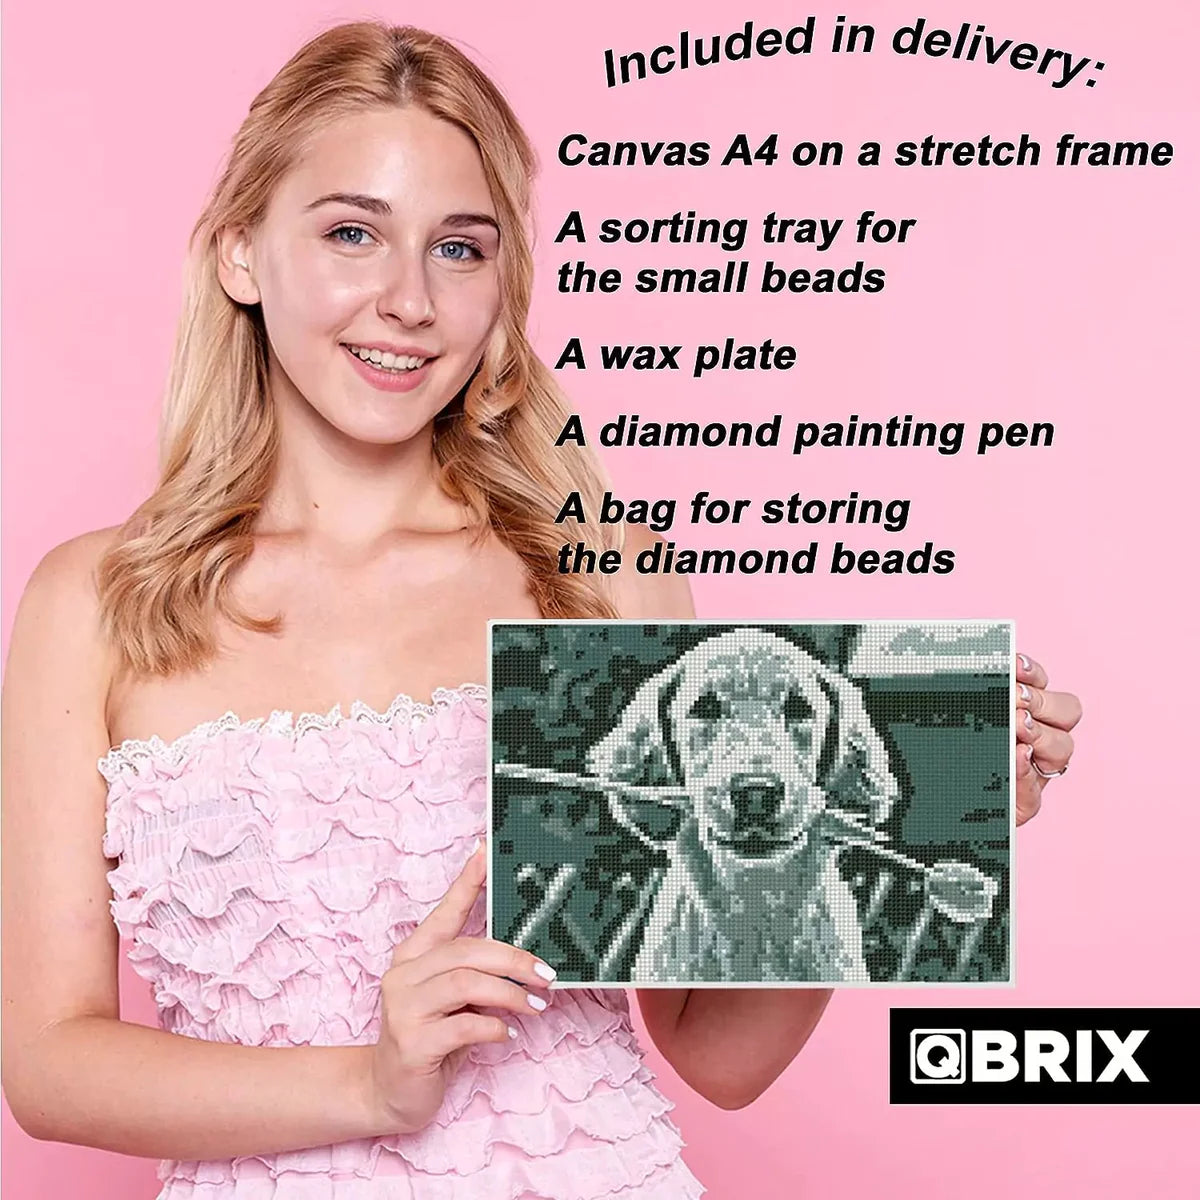 Qbrix Diamond Painting Kit